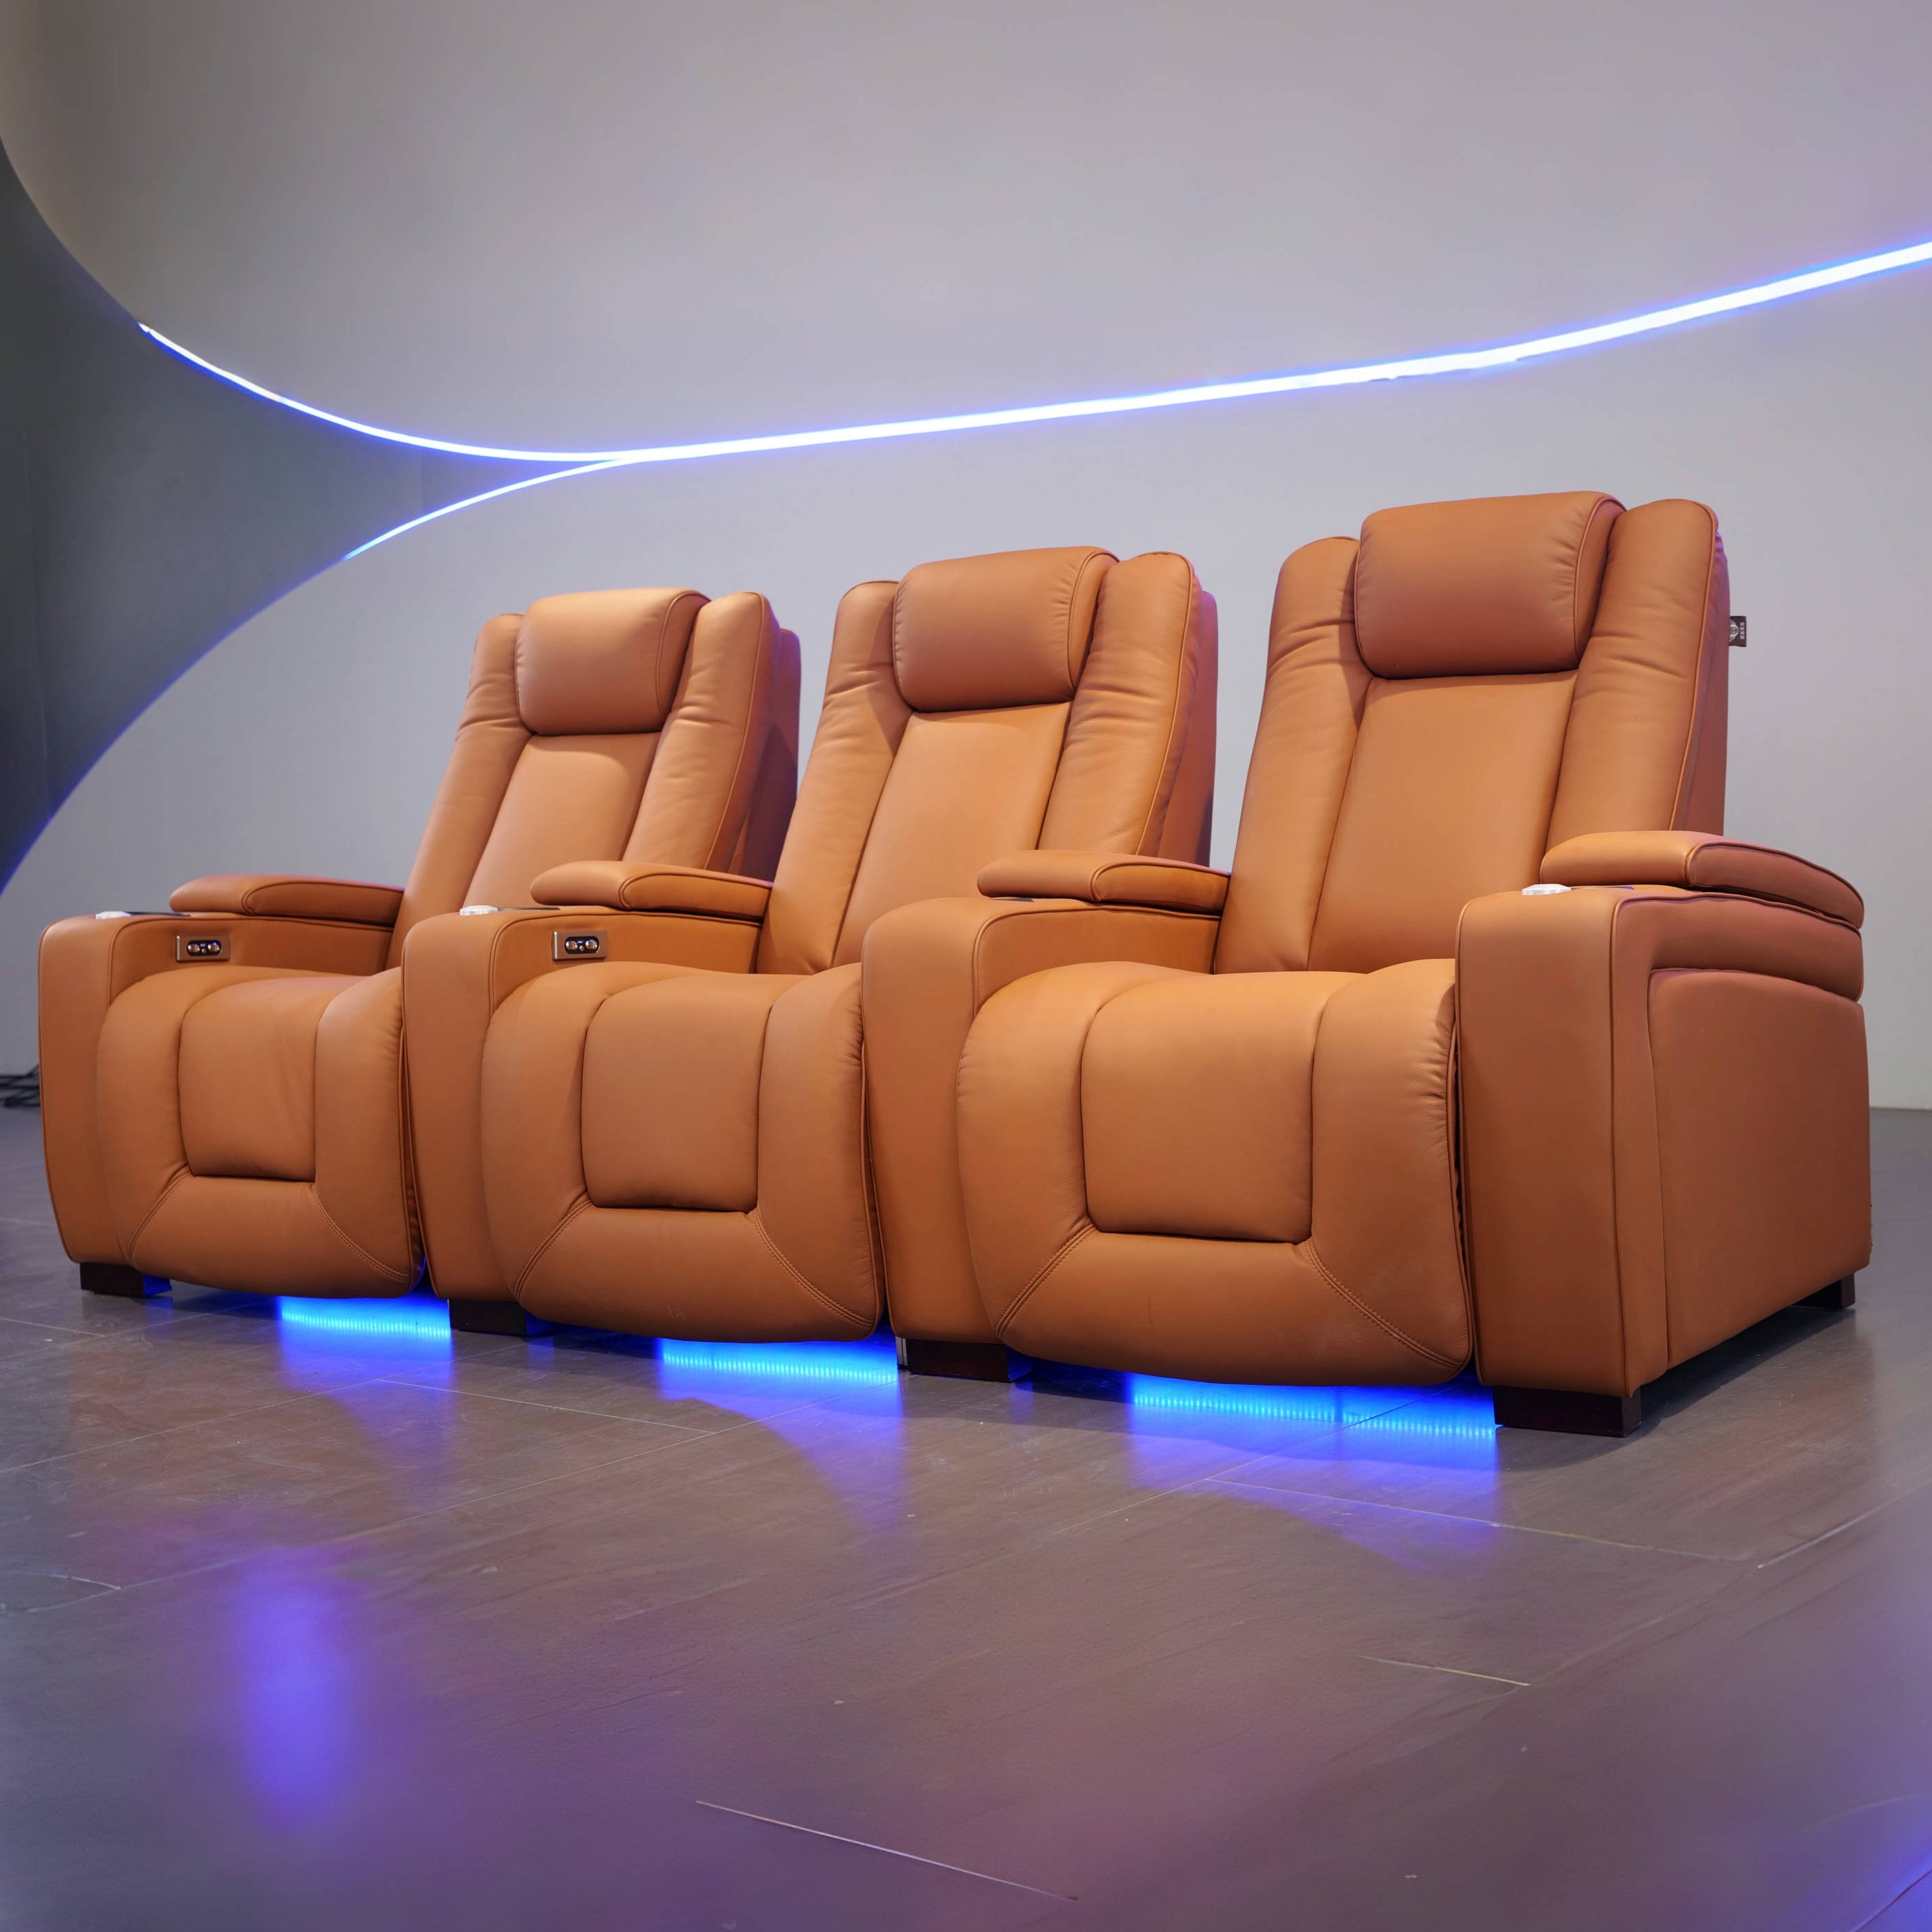 Villa cinema deluxe cabin smart home cinema leather retractable function sofa audio-visual room electric sofa